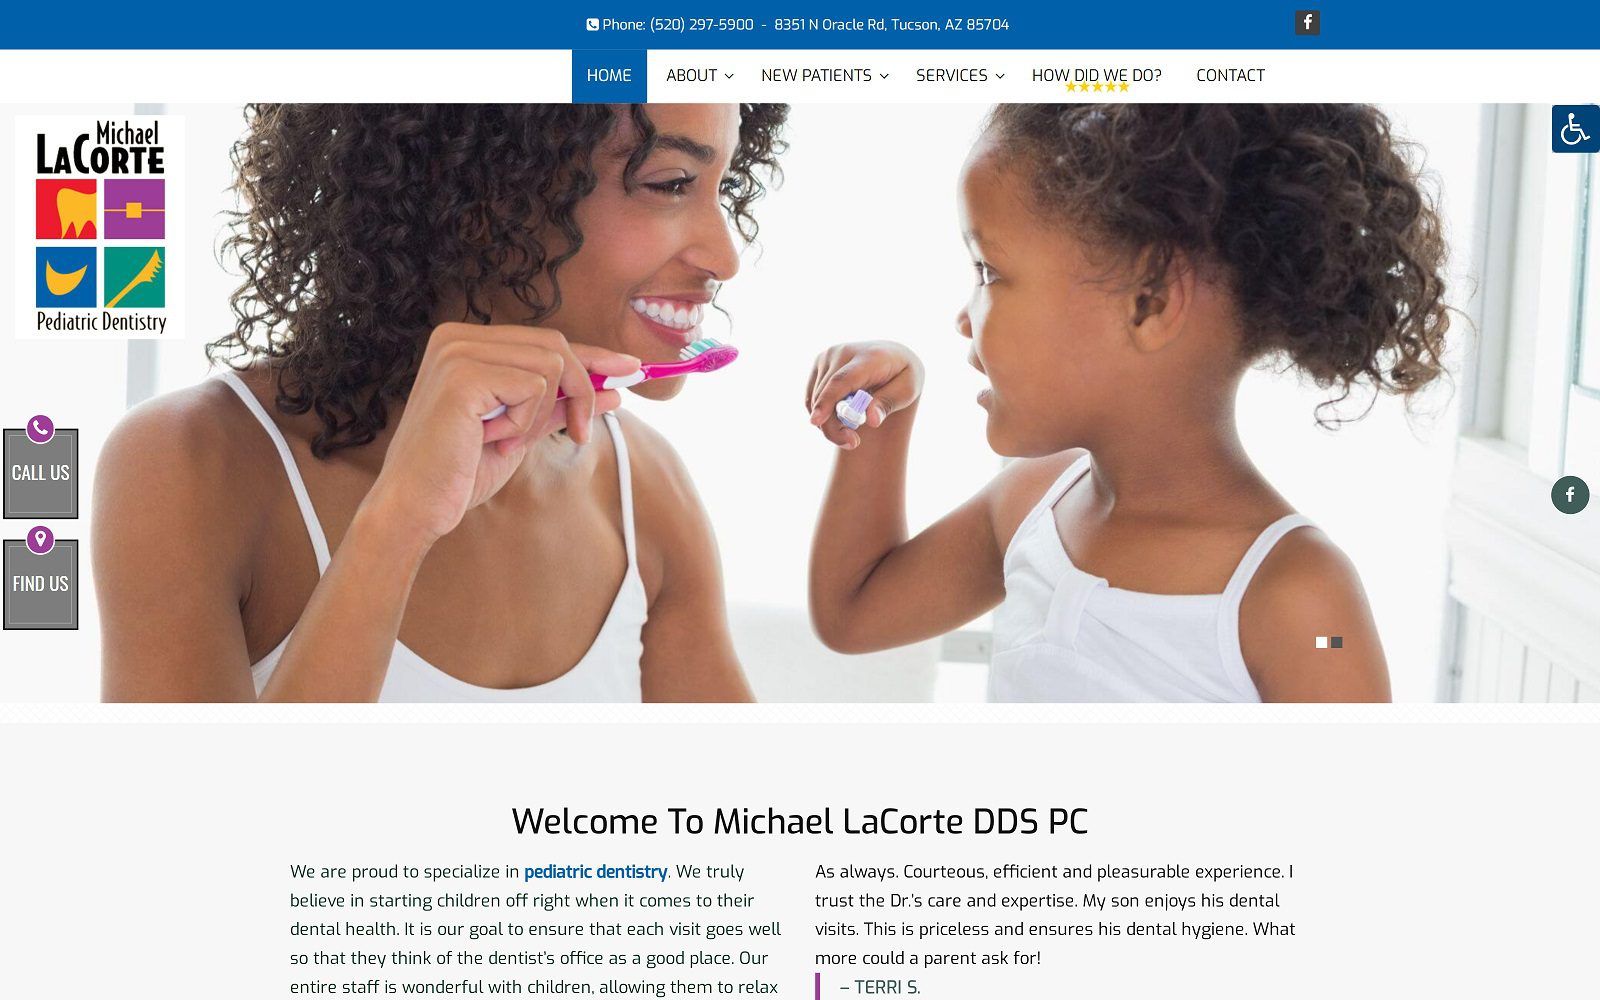 The screenshot of michael lacorte dds pc - pediatric dentist website